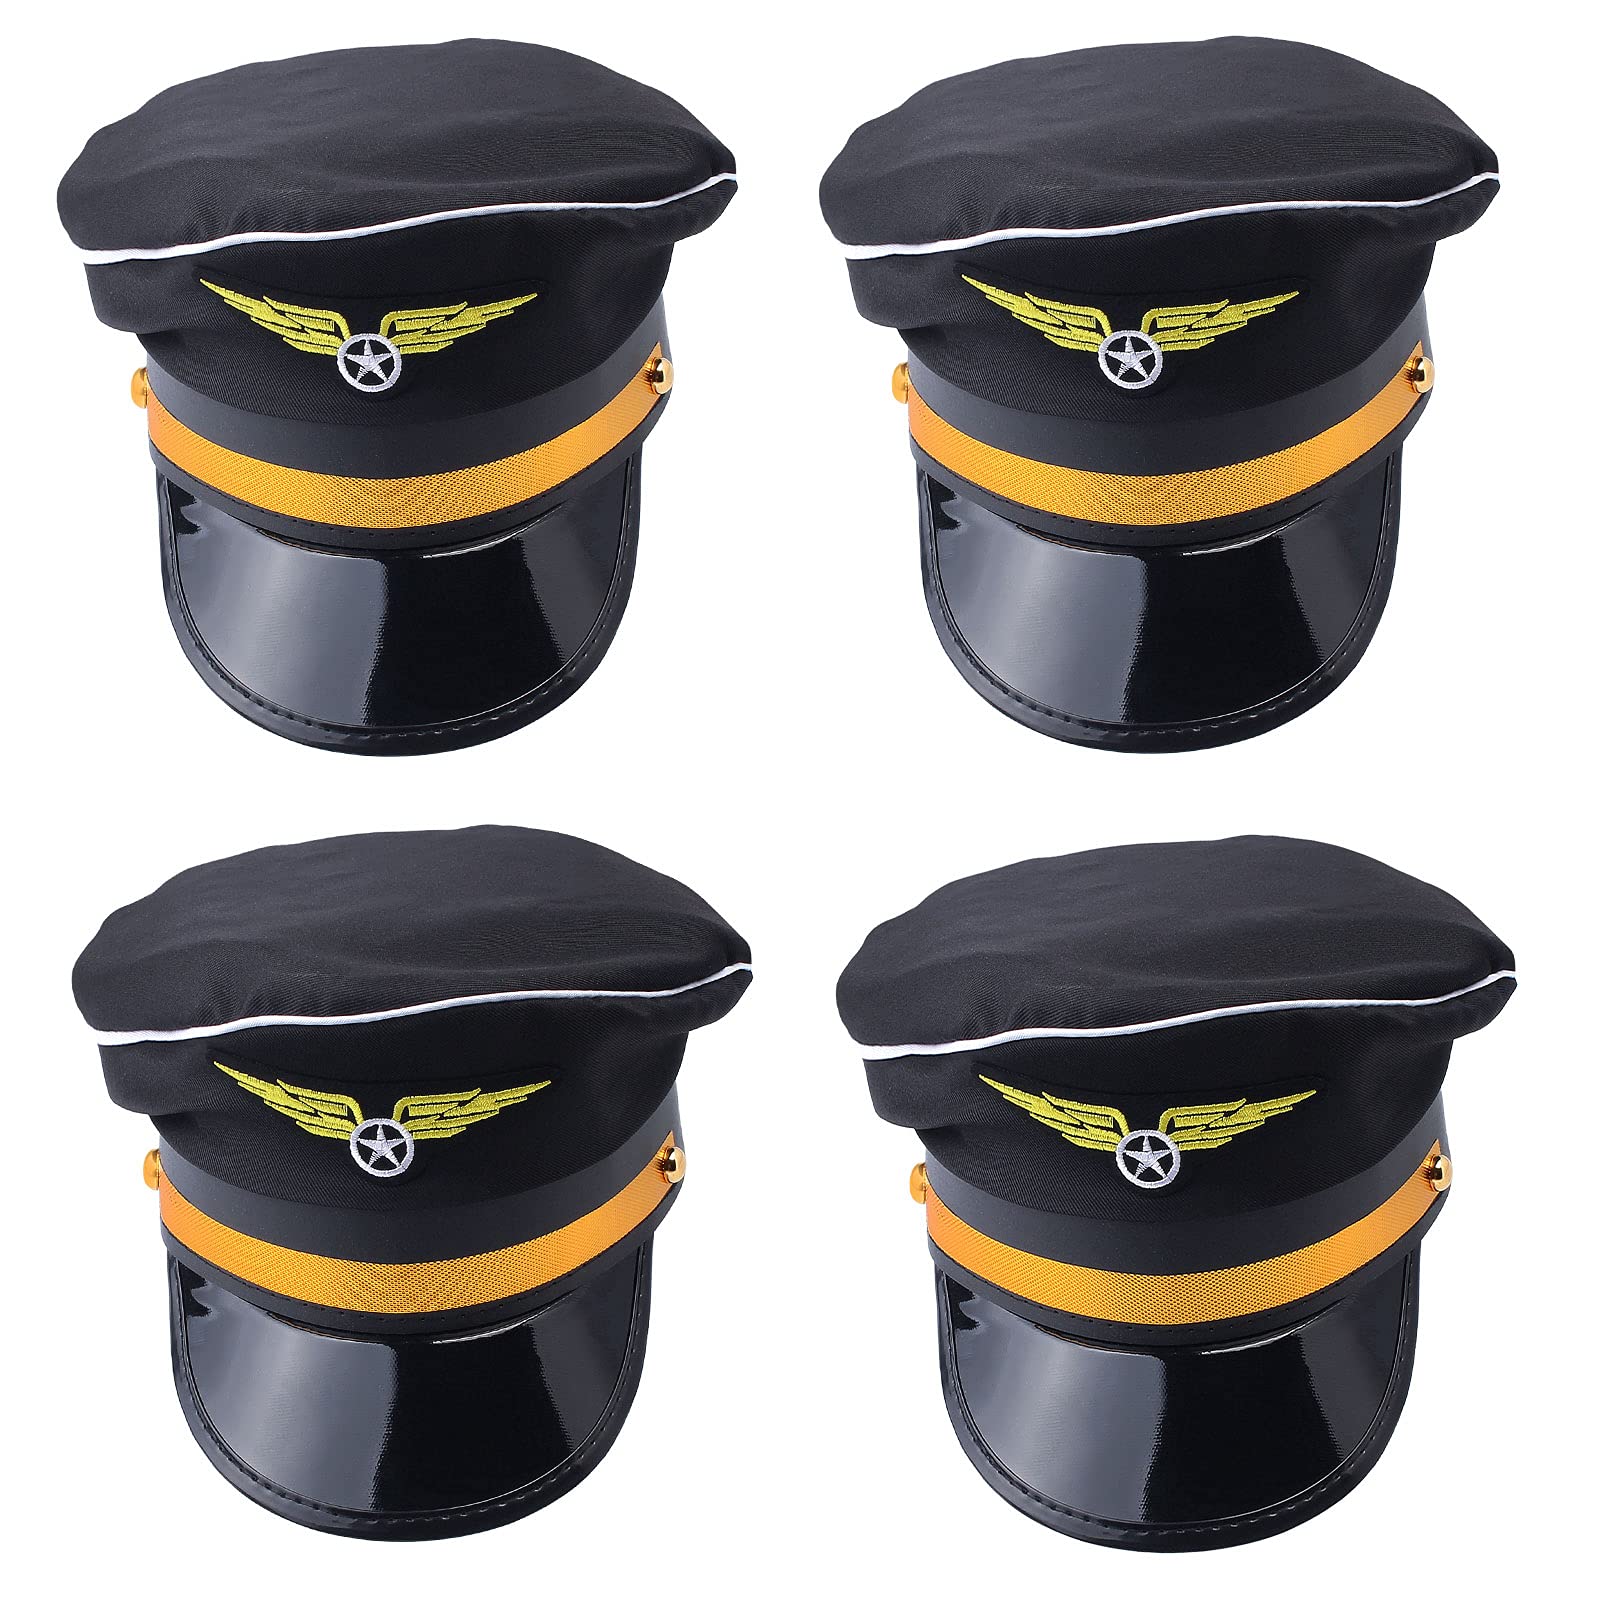 Yewong Pilot Hat Set